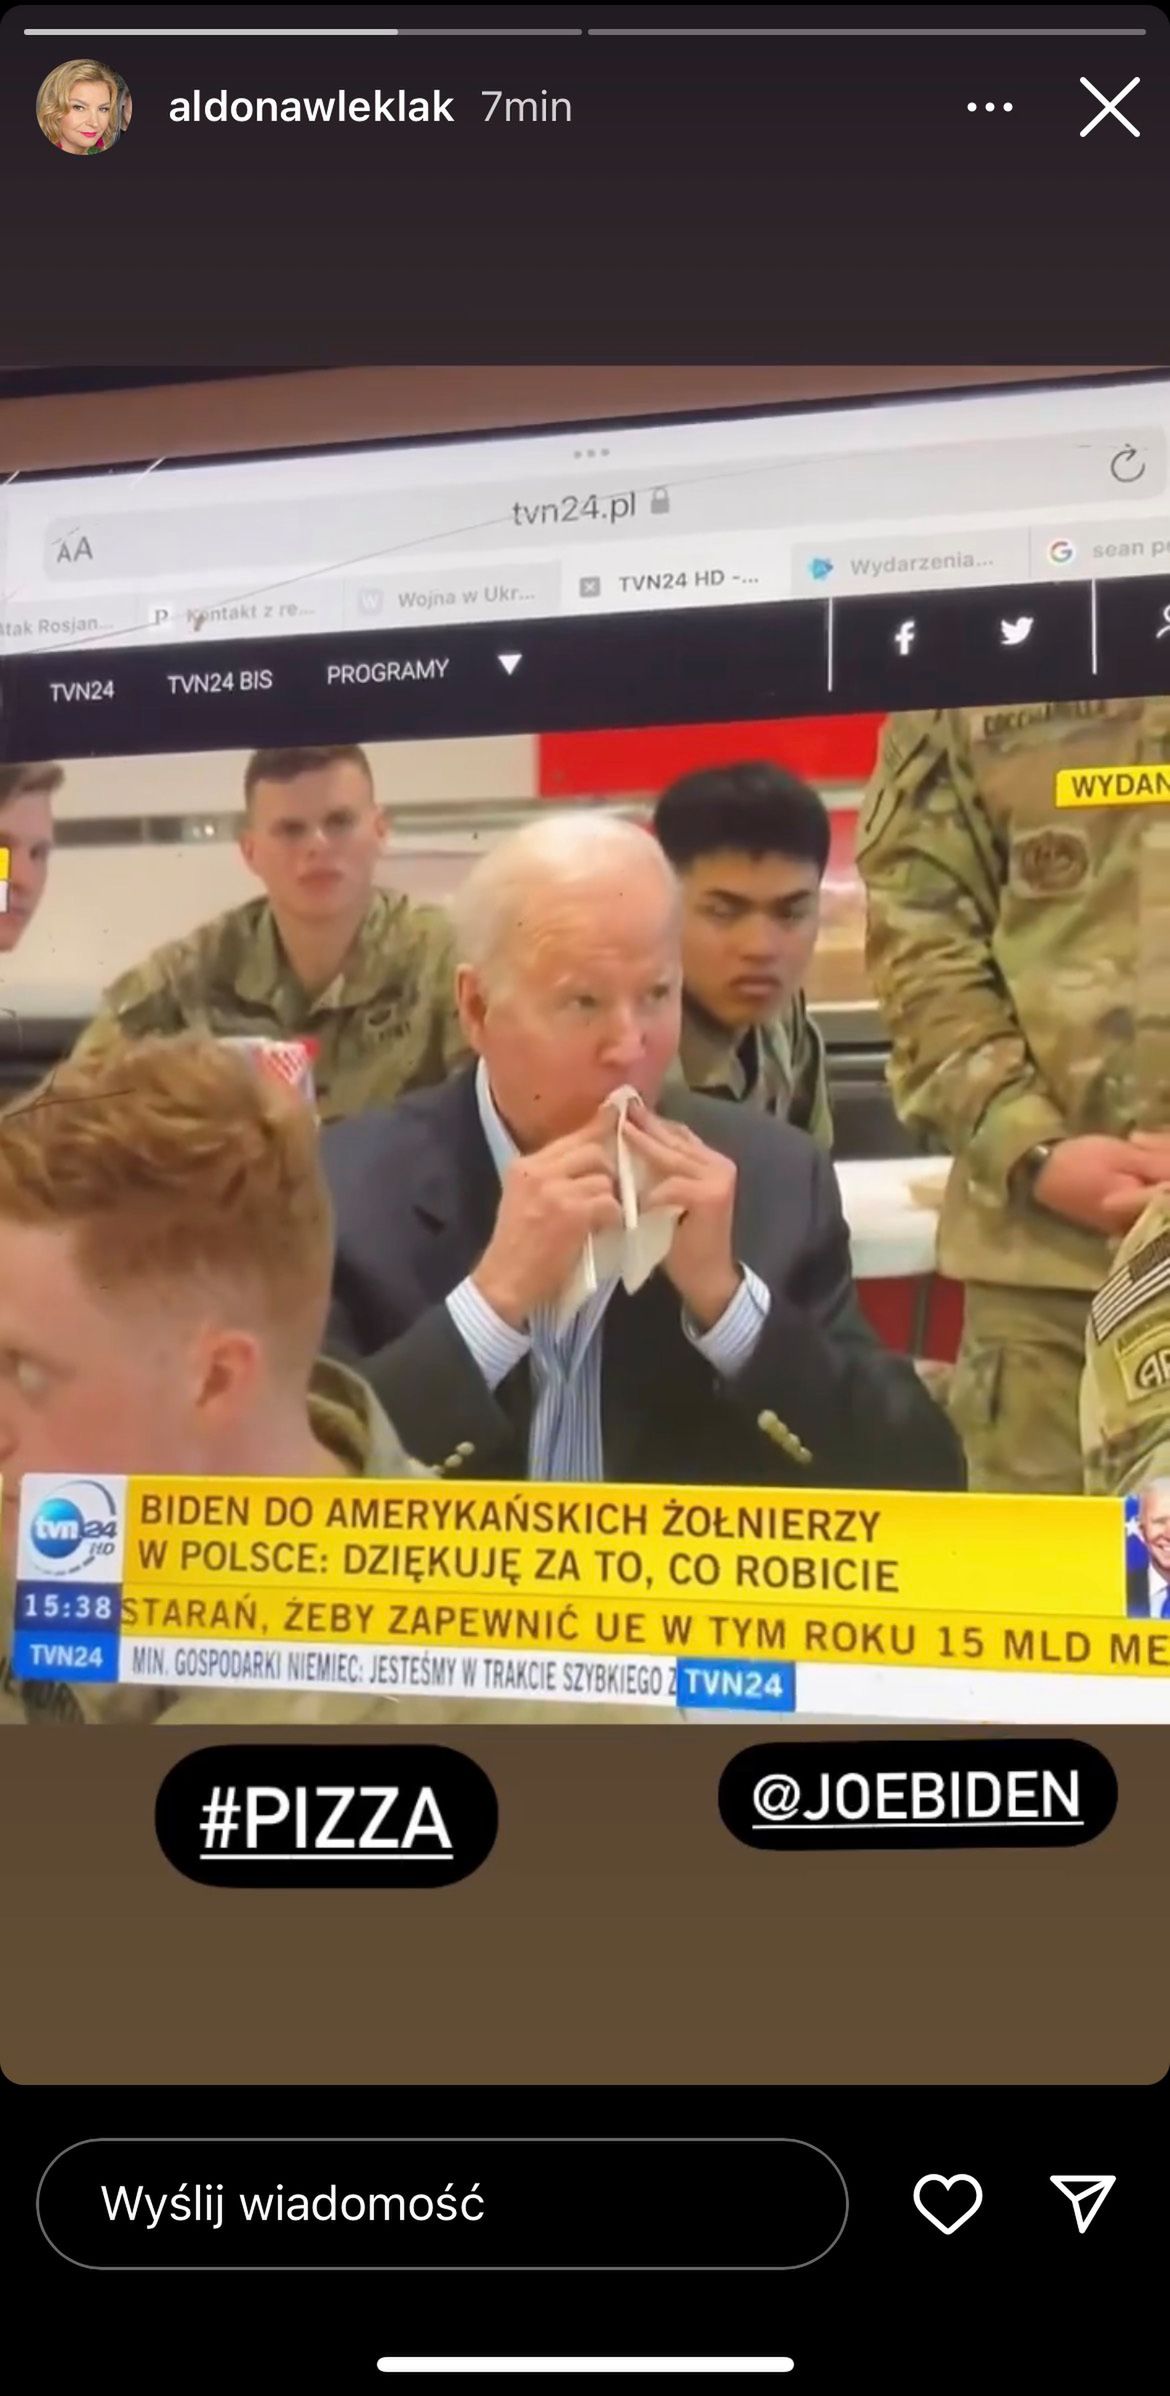 Joe Biden pałaszuje pizzę